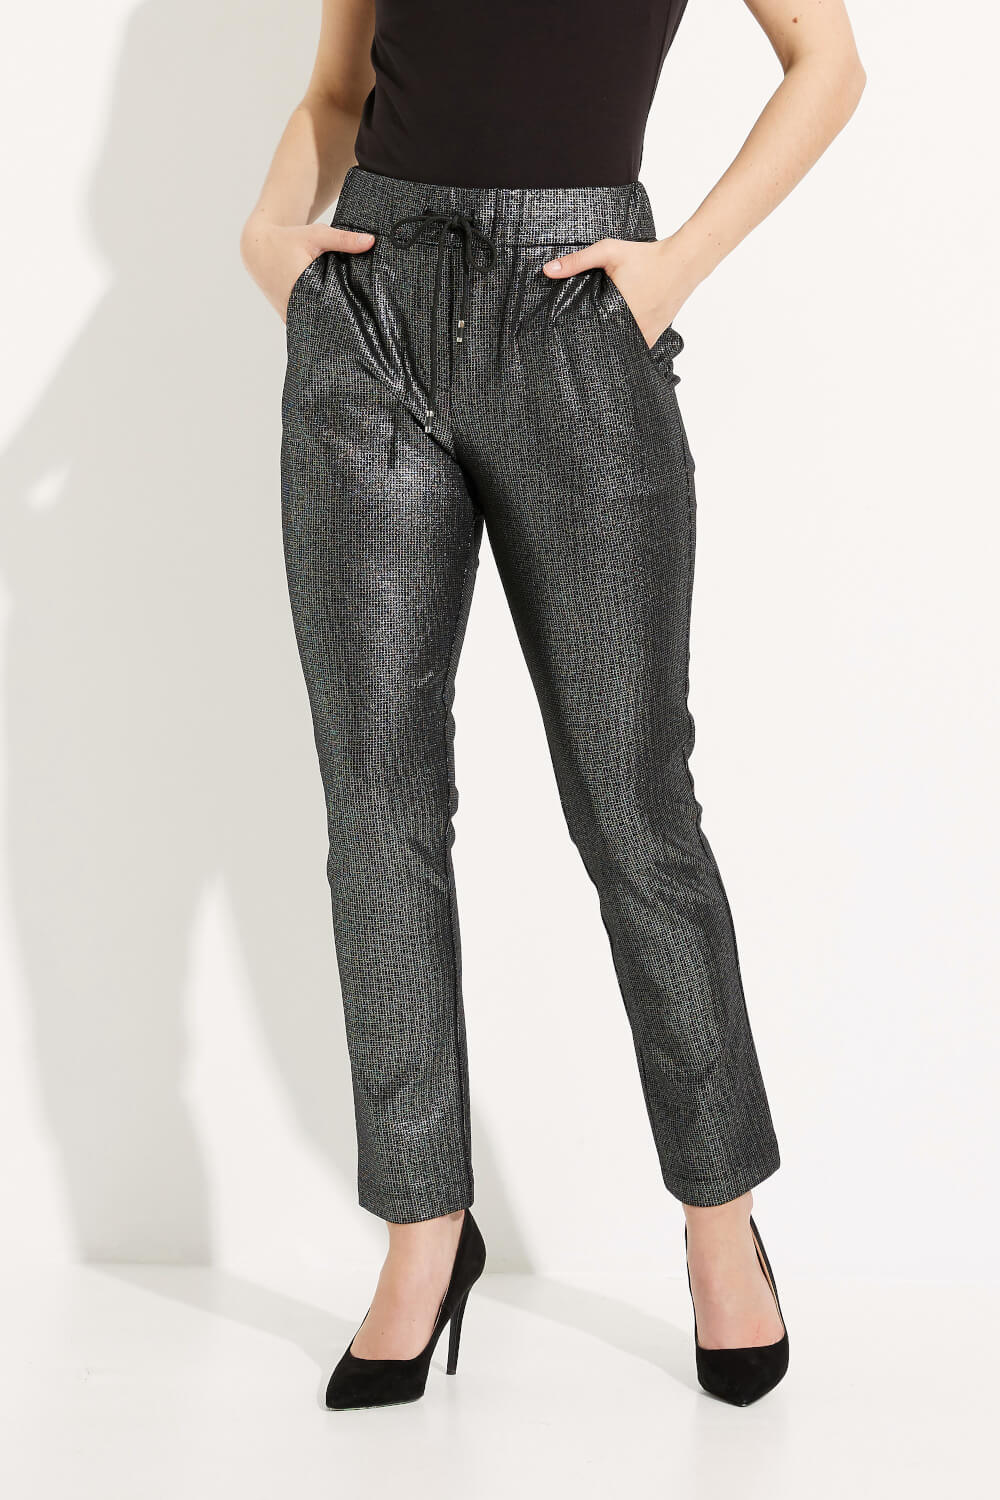 Metallic Drawstring Pants Style 233001. Black/silver